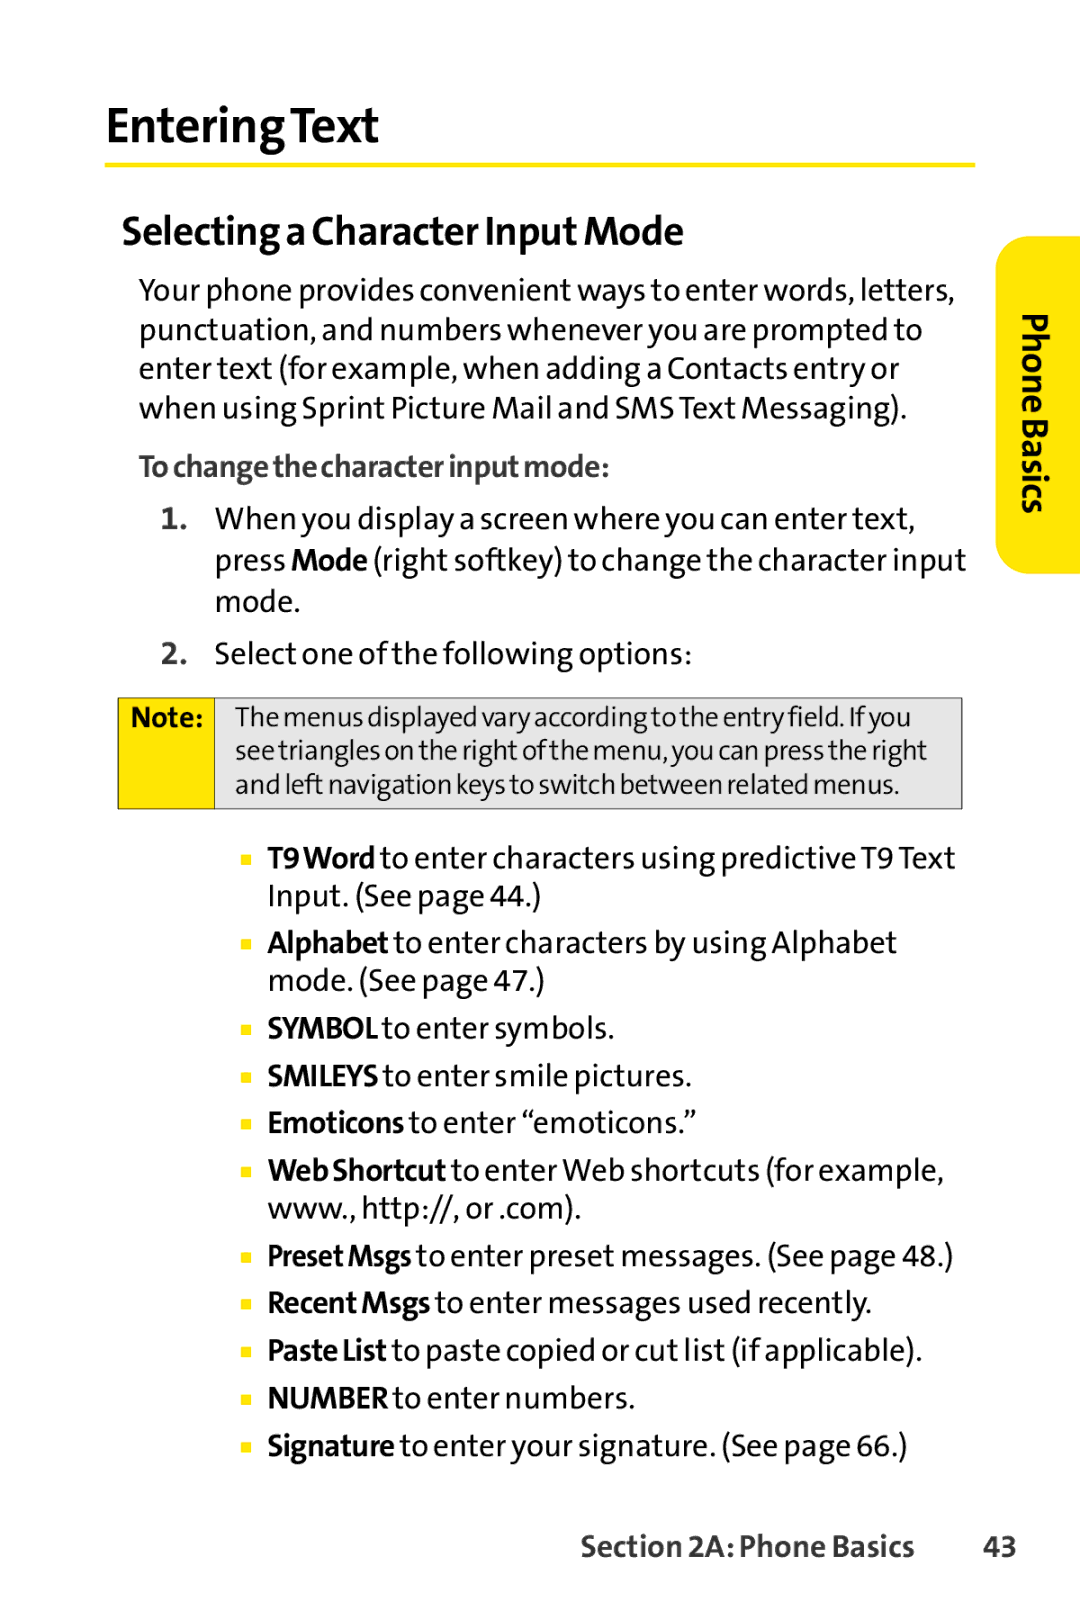 Sprint Nextel SCP-3200 manual EnteringText, Selecting a Character InputMode, Tochangethecharacterinputmode 